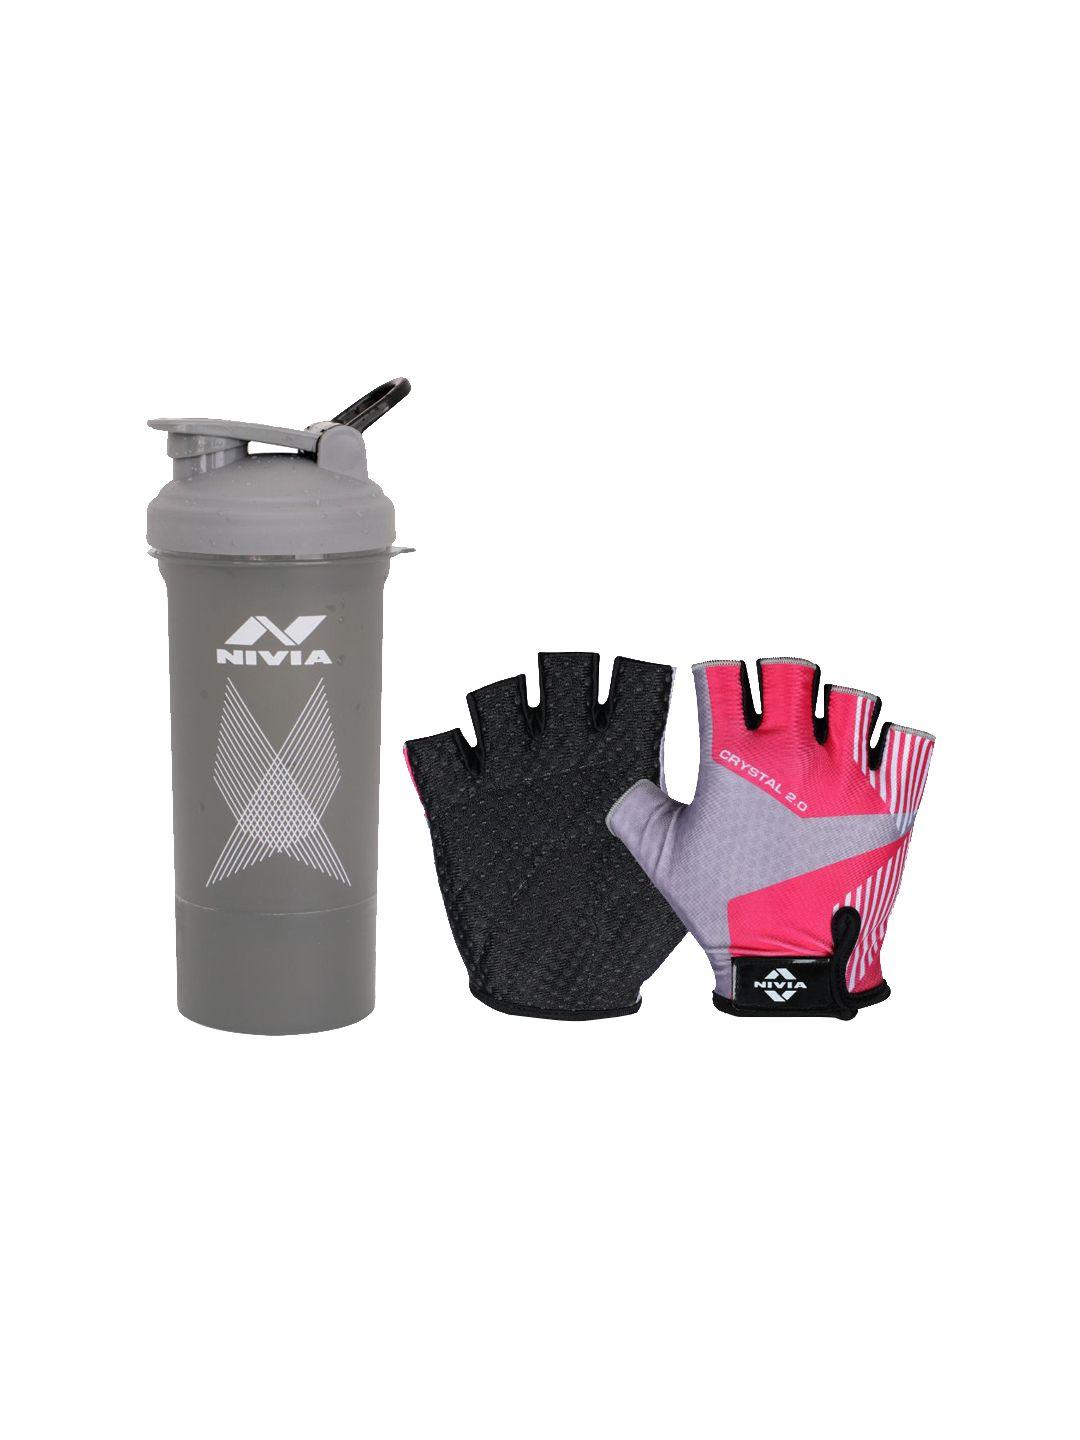 nivia printed gym gloves & shaker